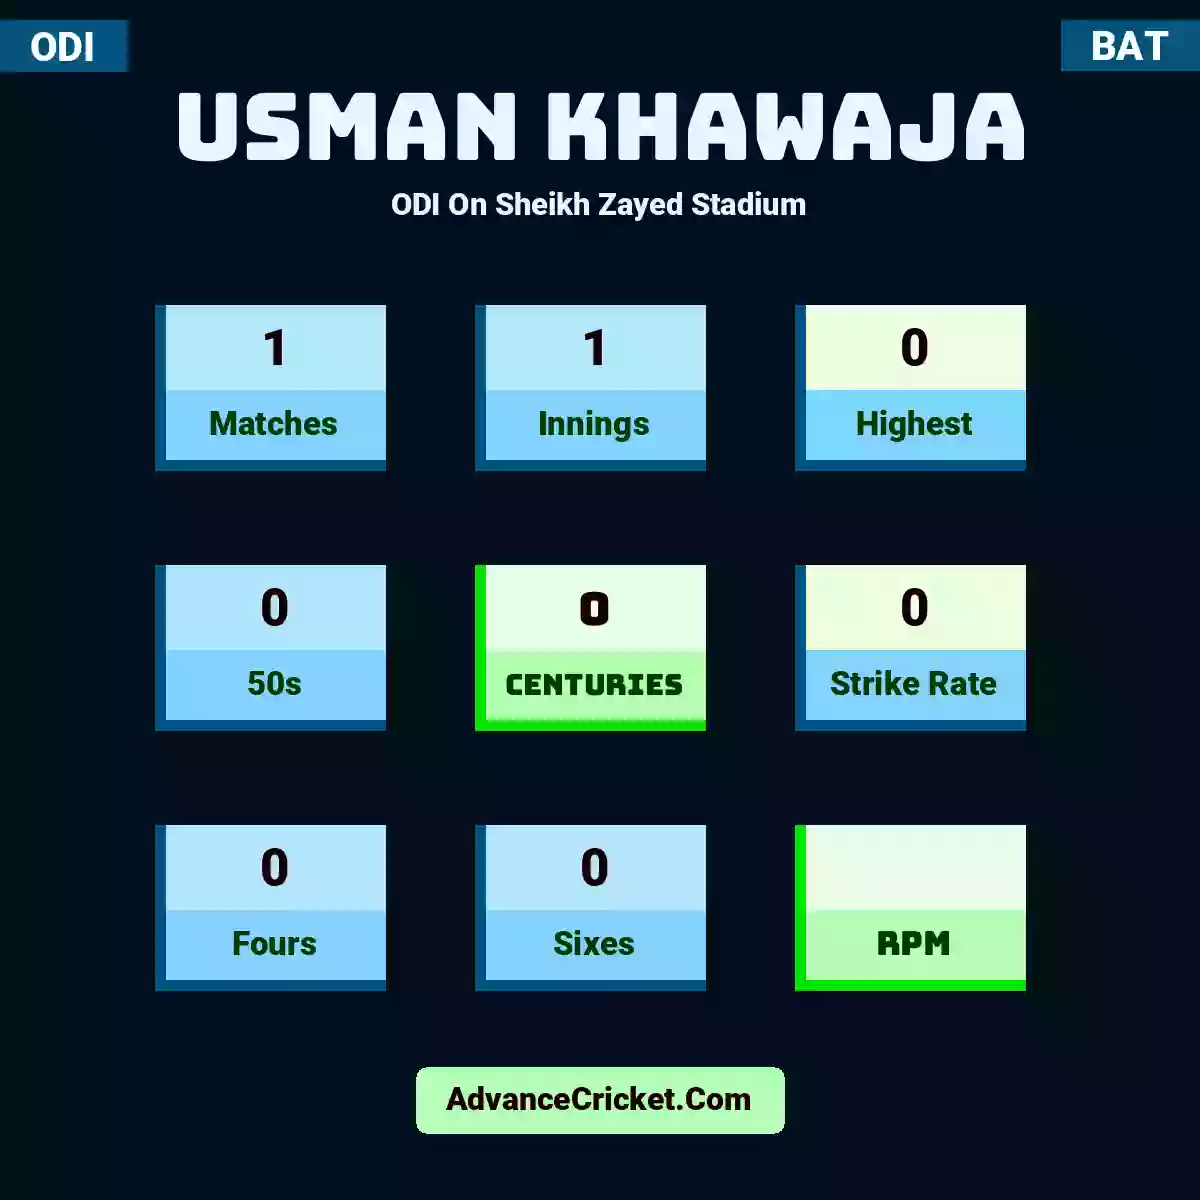 Usman Khawaja ODI  On Sheikh Zayed Stadium, Usman Khawaja played 1 matches, scored 0 runs as highest, 0 half-centuries, and 0 centuries, with a strike rate of 0. U.Khawaja hit 0 fours and 0 sixes.